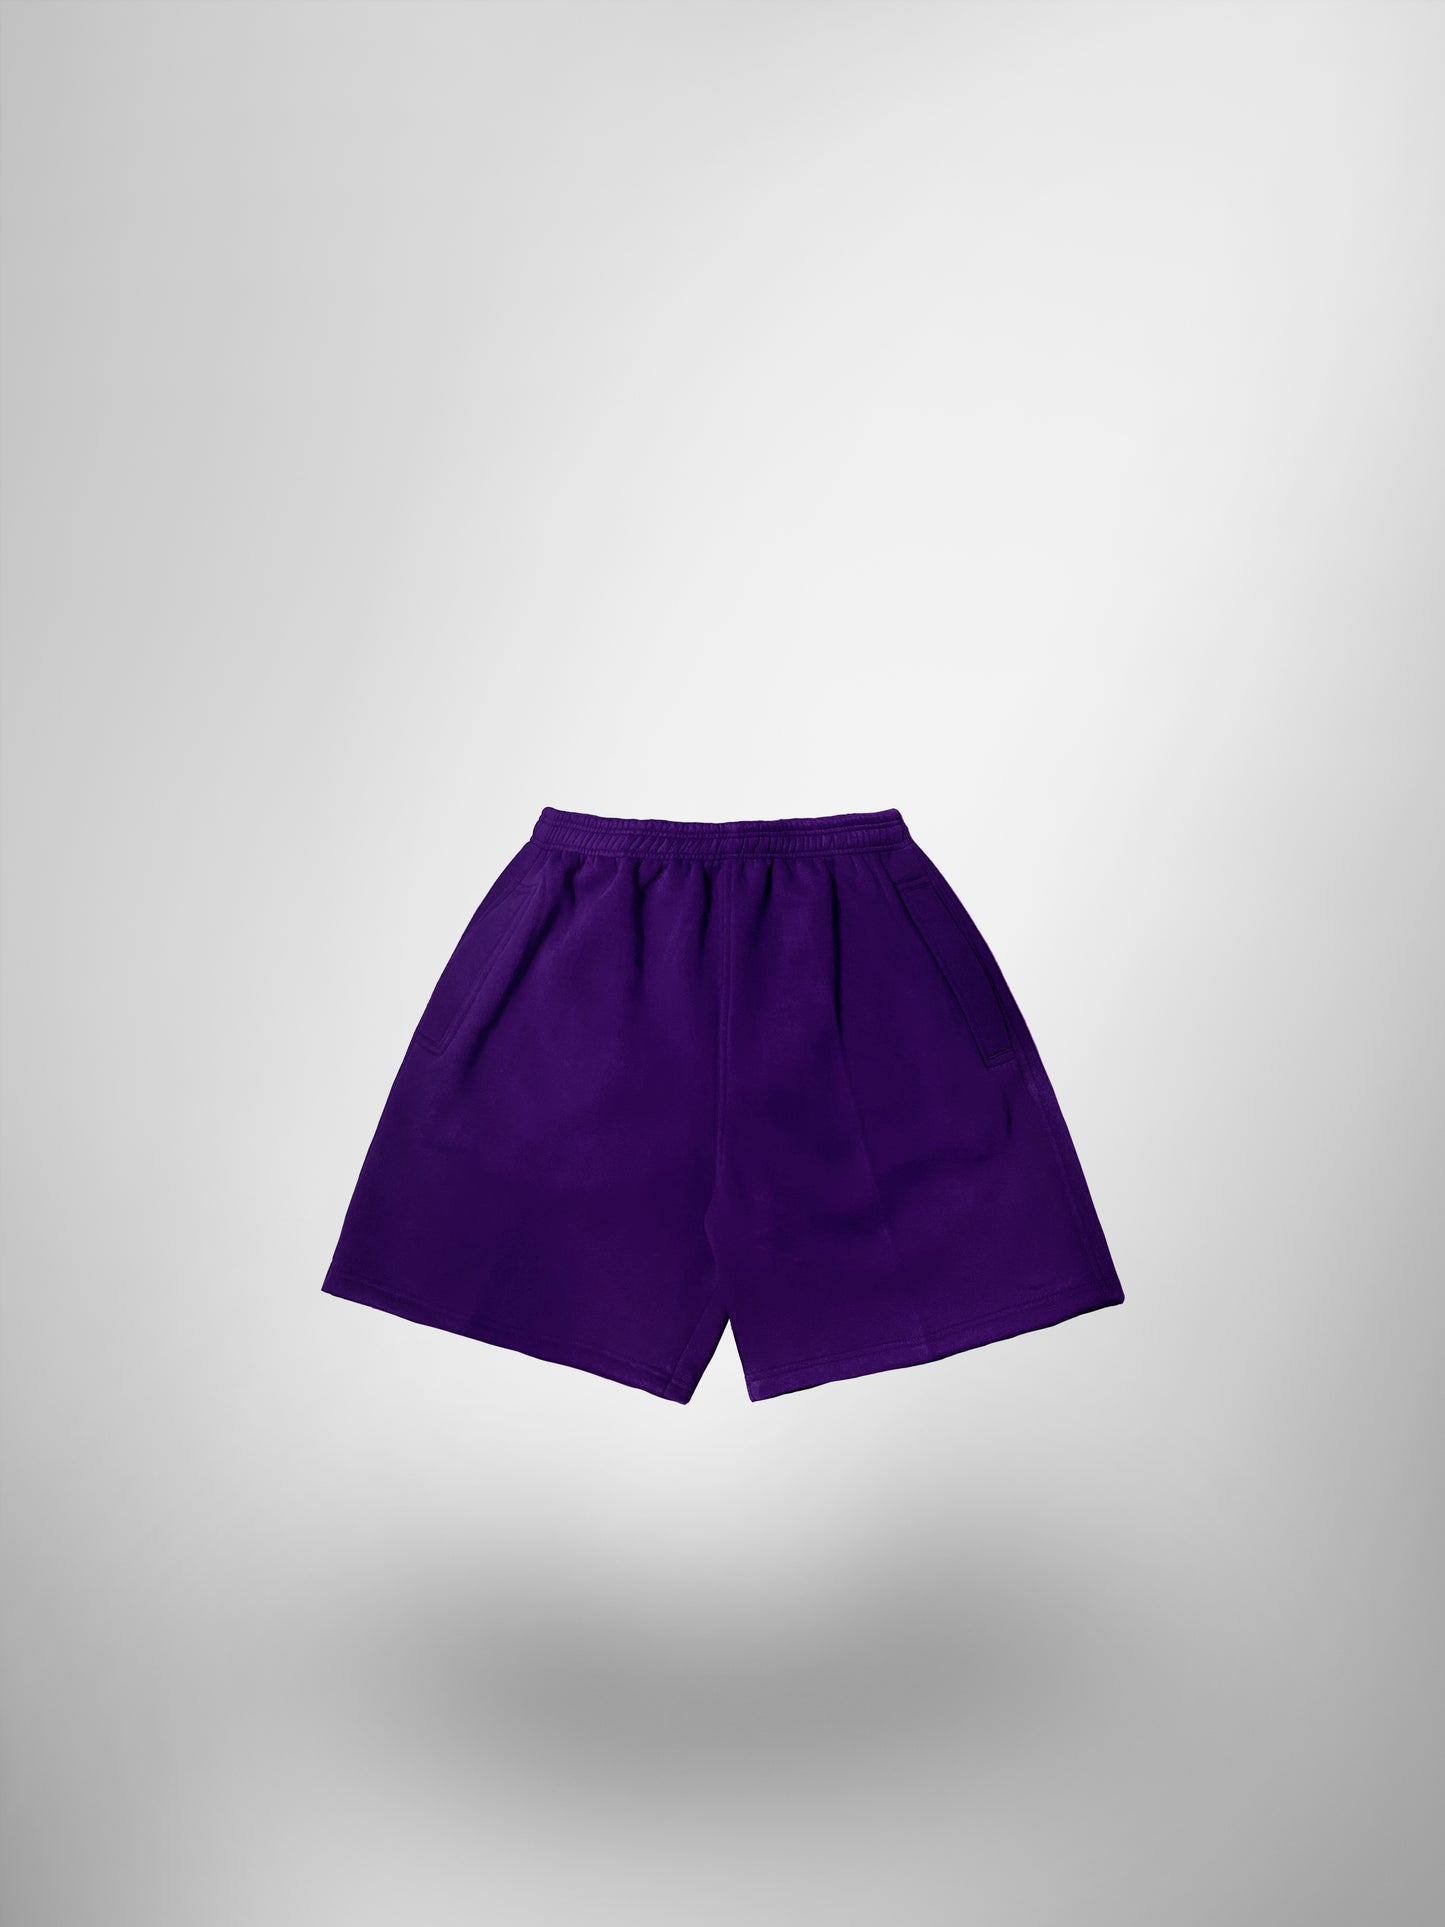 Purpled Shorts